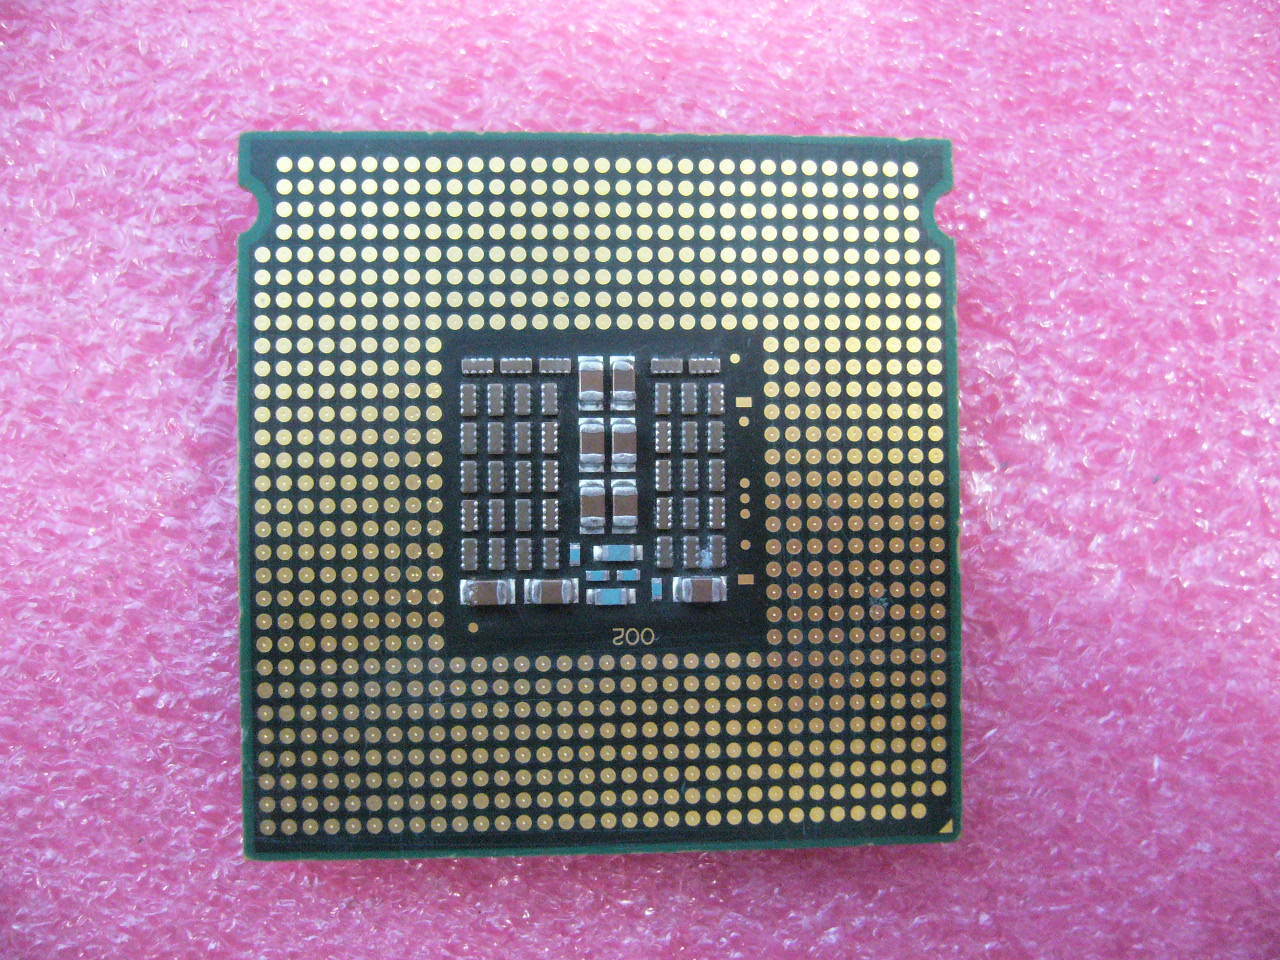 QTY 1x Intel Xeon CPU Quad Core E5462 2.8Ghz/12MB/1600Mhz LGA771 SLANT - Click Image to Close